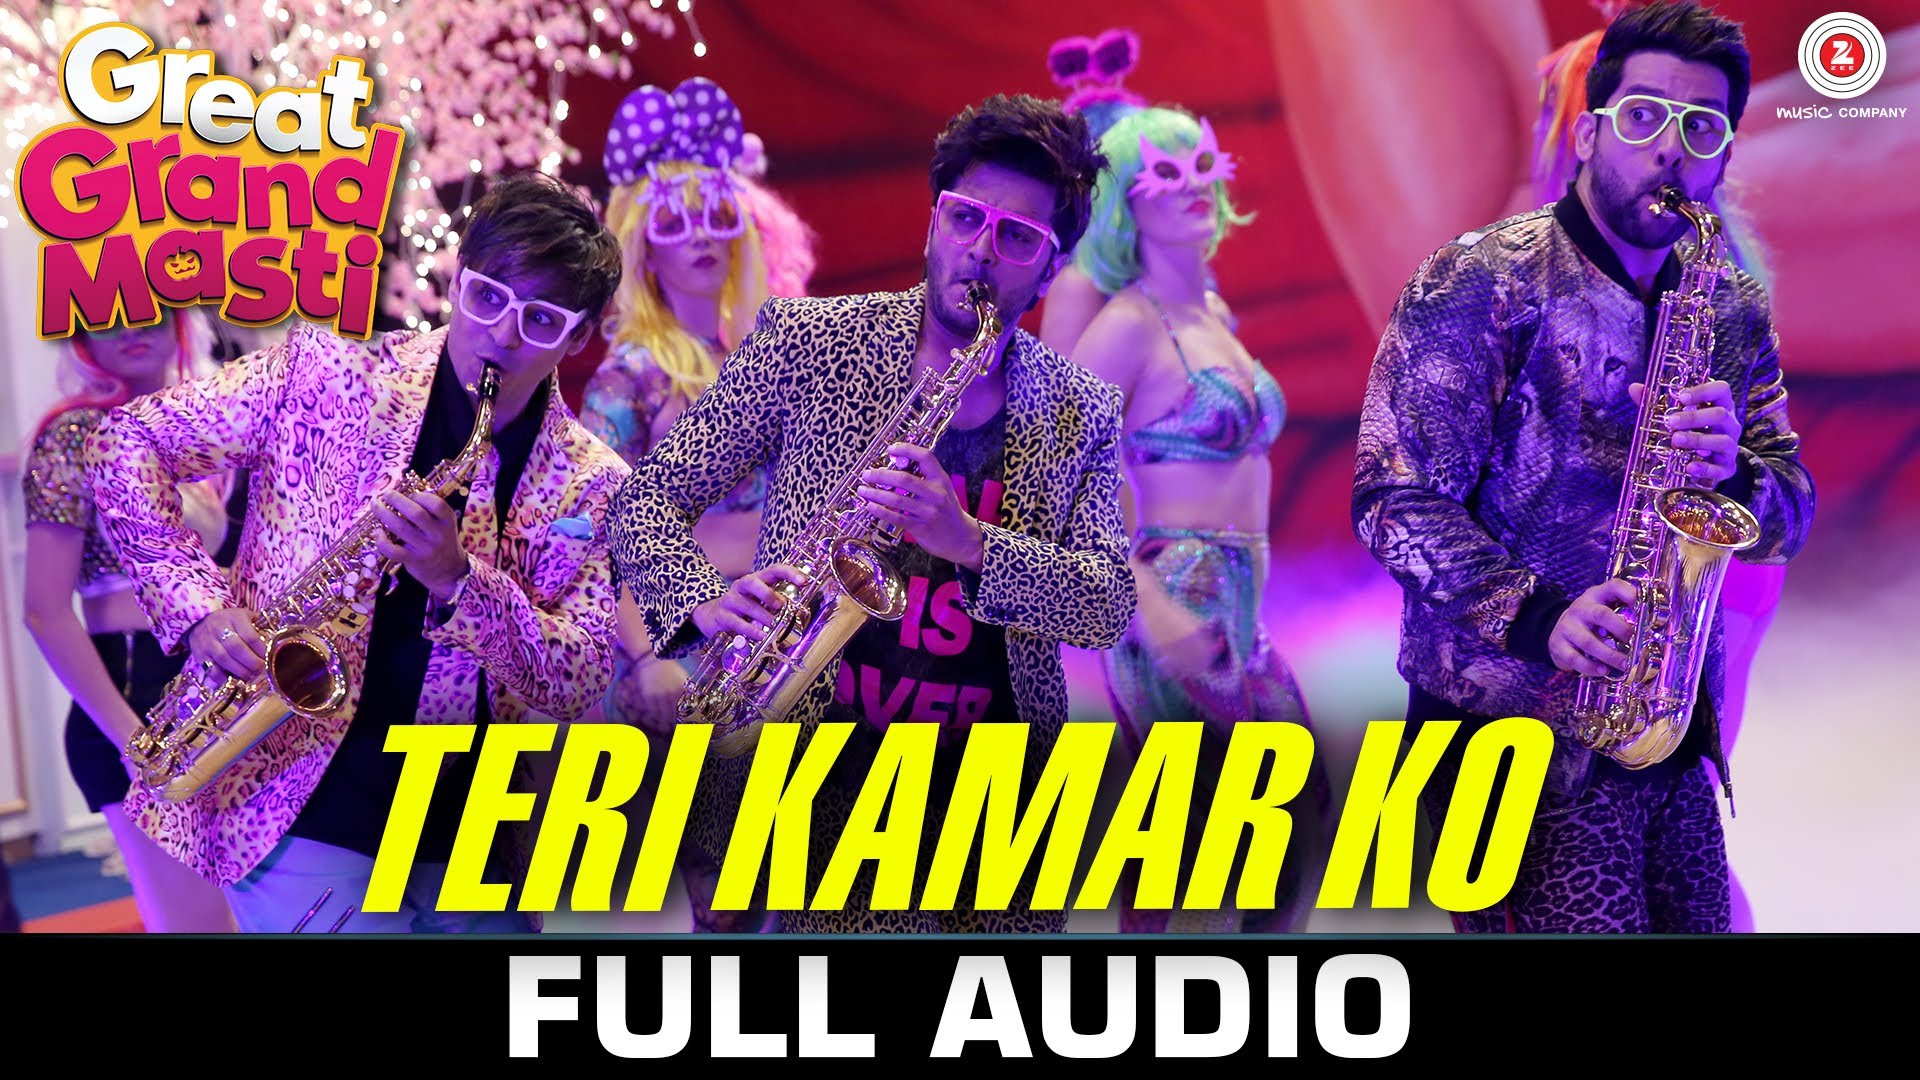 Great Grand Masti New Song Teri Kamar Ko by Kanika Kapoor